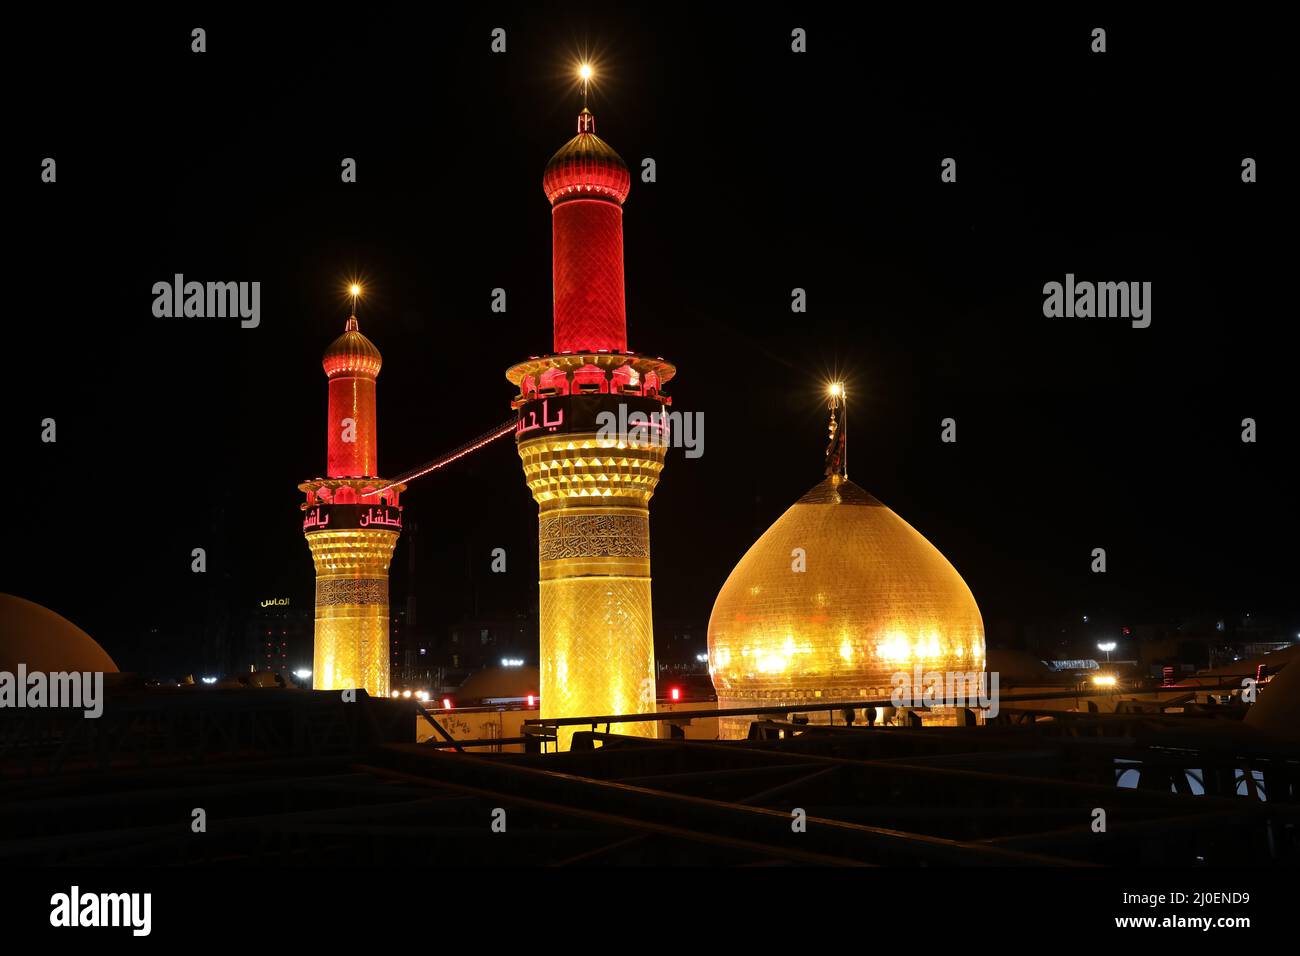 karbala, iraq - september 27, 2021: photo of imam husien shrine in karbala city in Arbaʽeen ilgrimage cermony Stock Photo